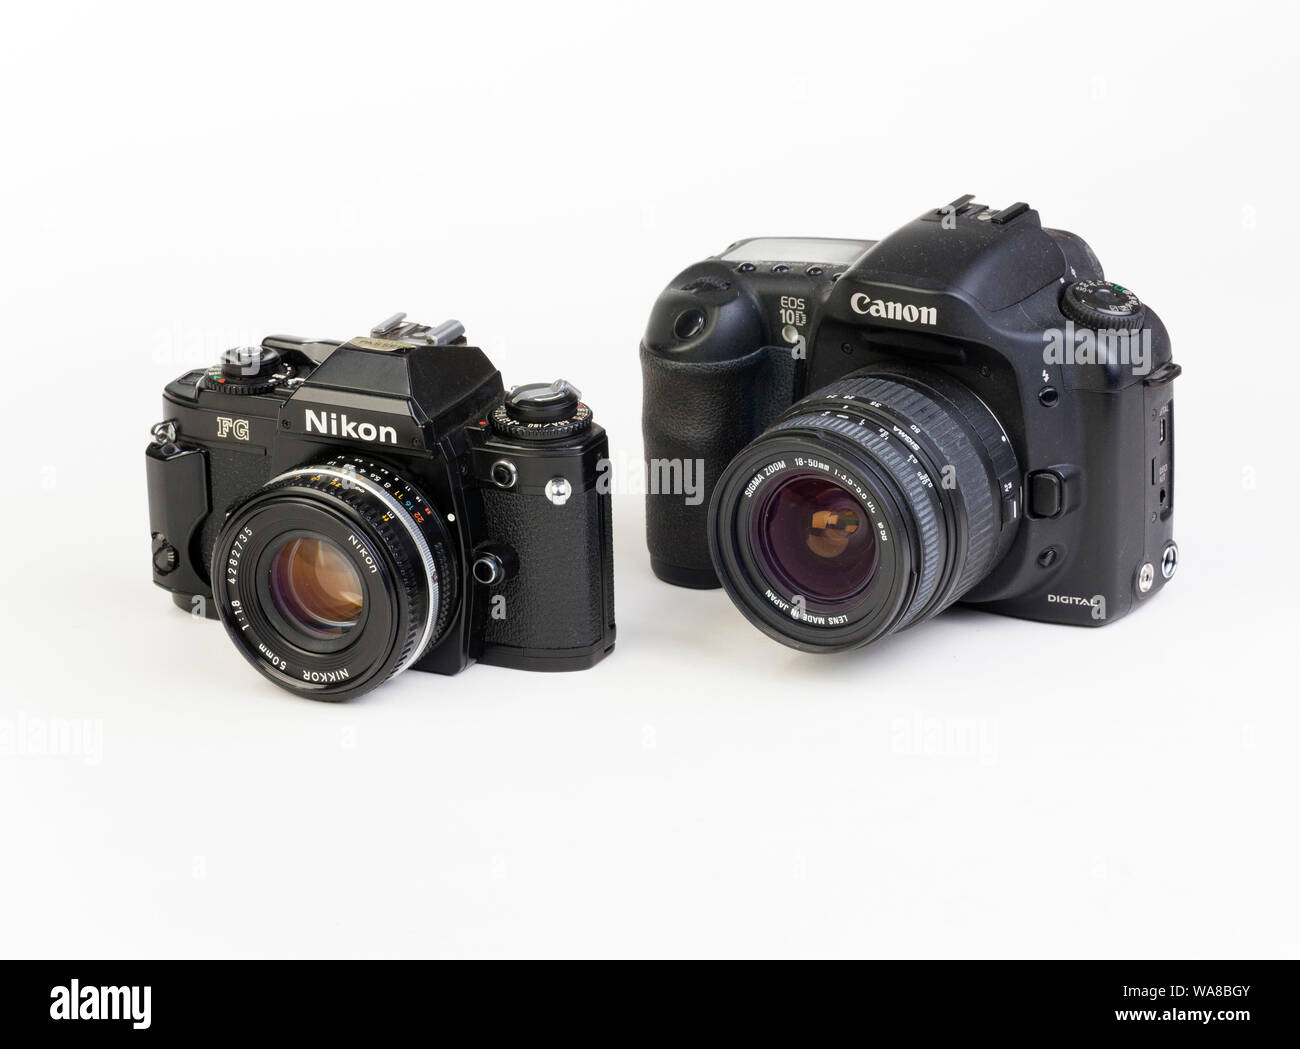 Nikon FG SLR Kamera mit Canon 10D digitale SLR-Kamera Stockfoto